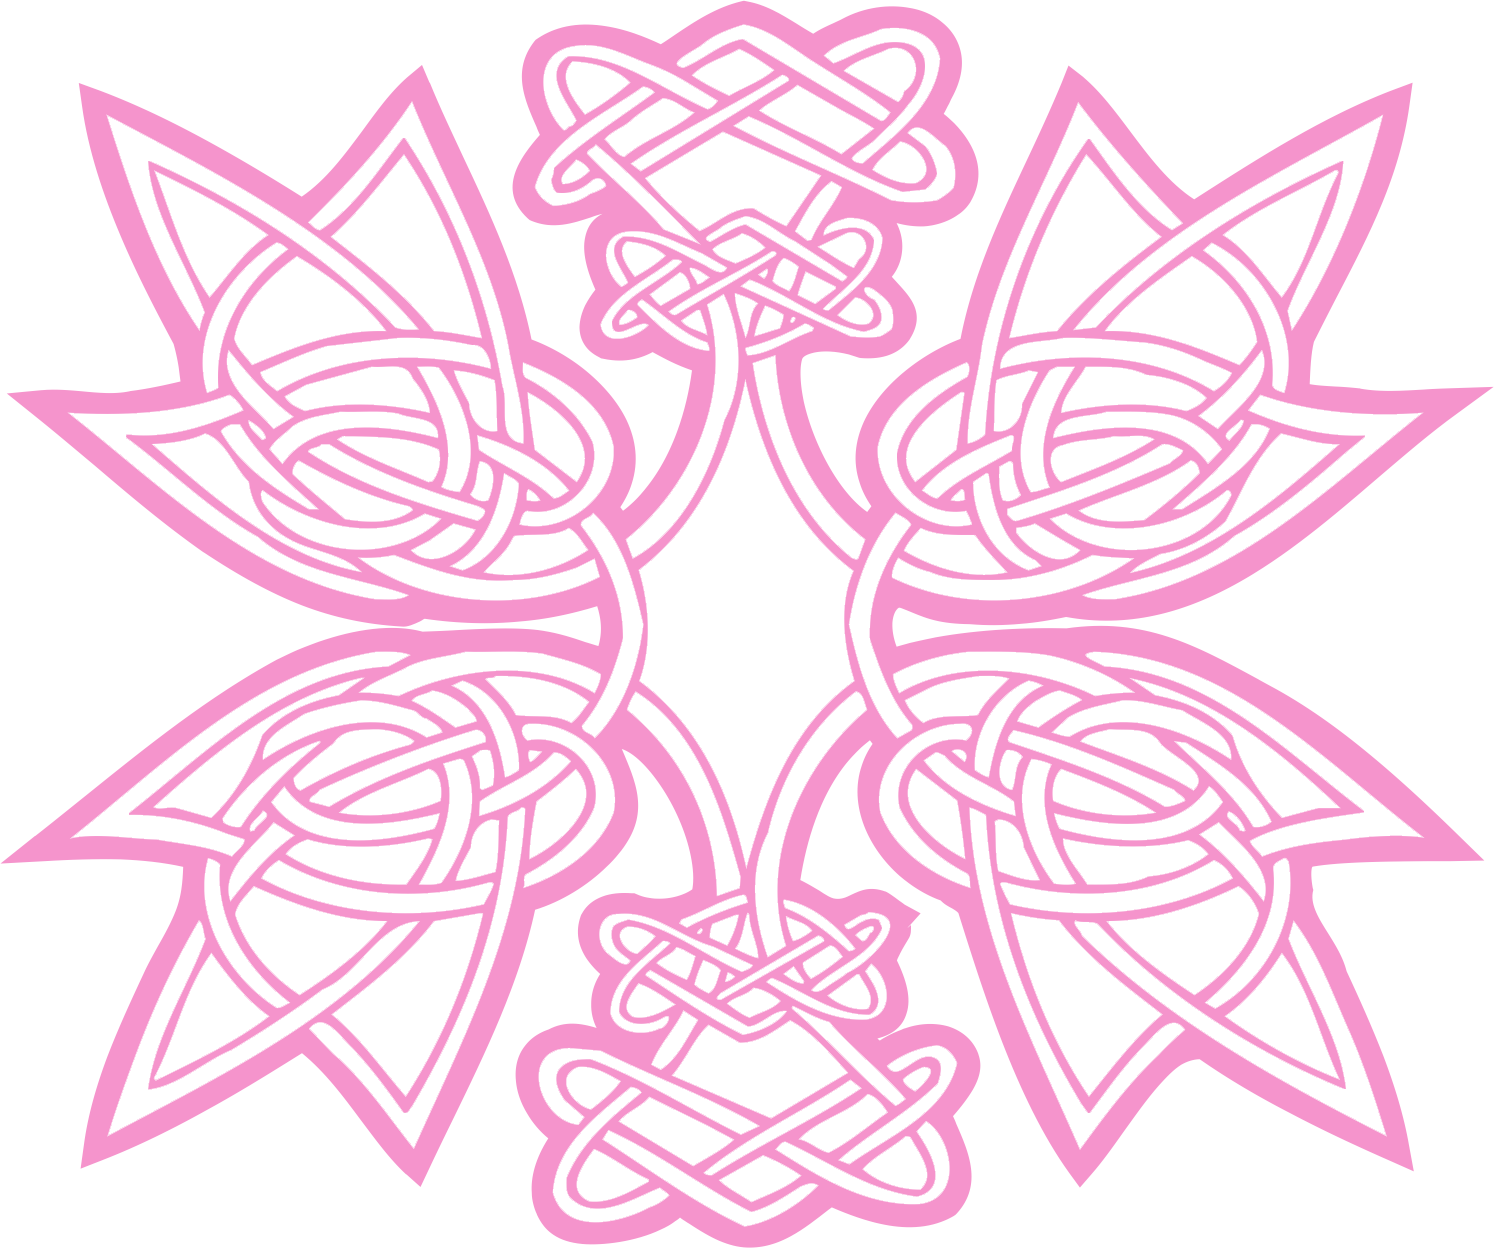 Celtic Knot Floral Ornament Vector PNG image